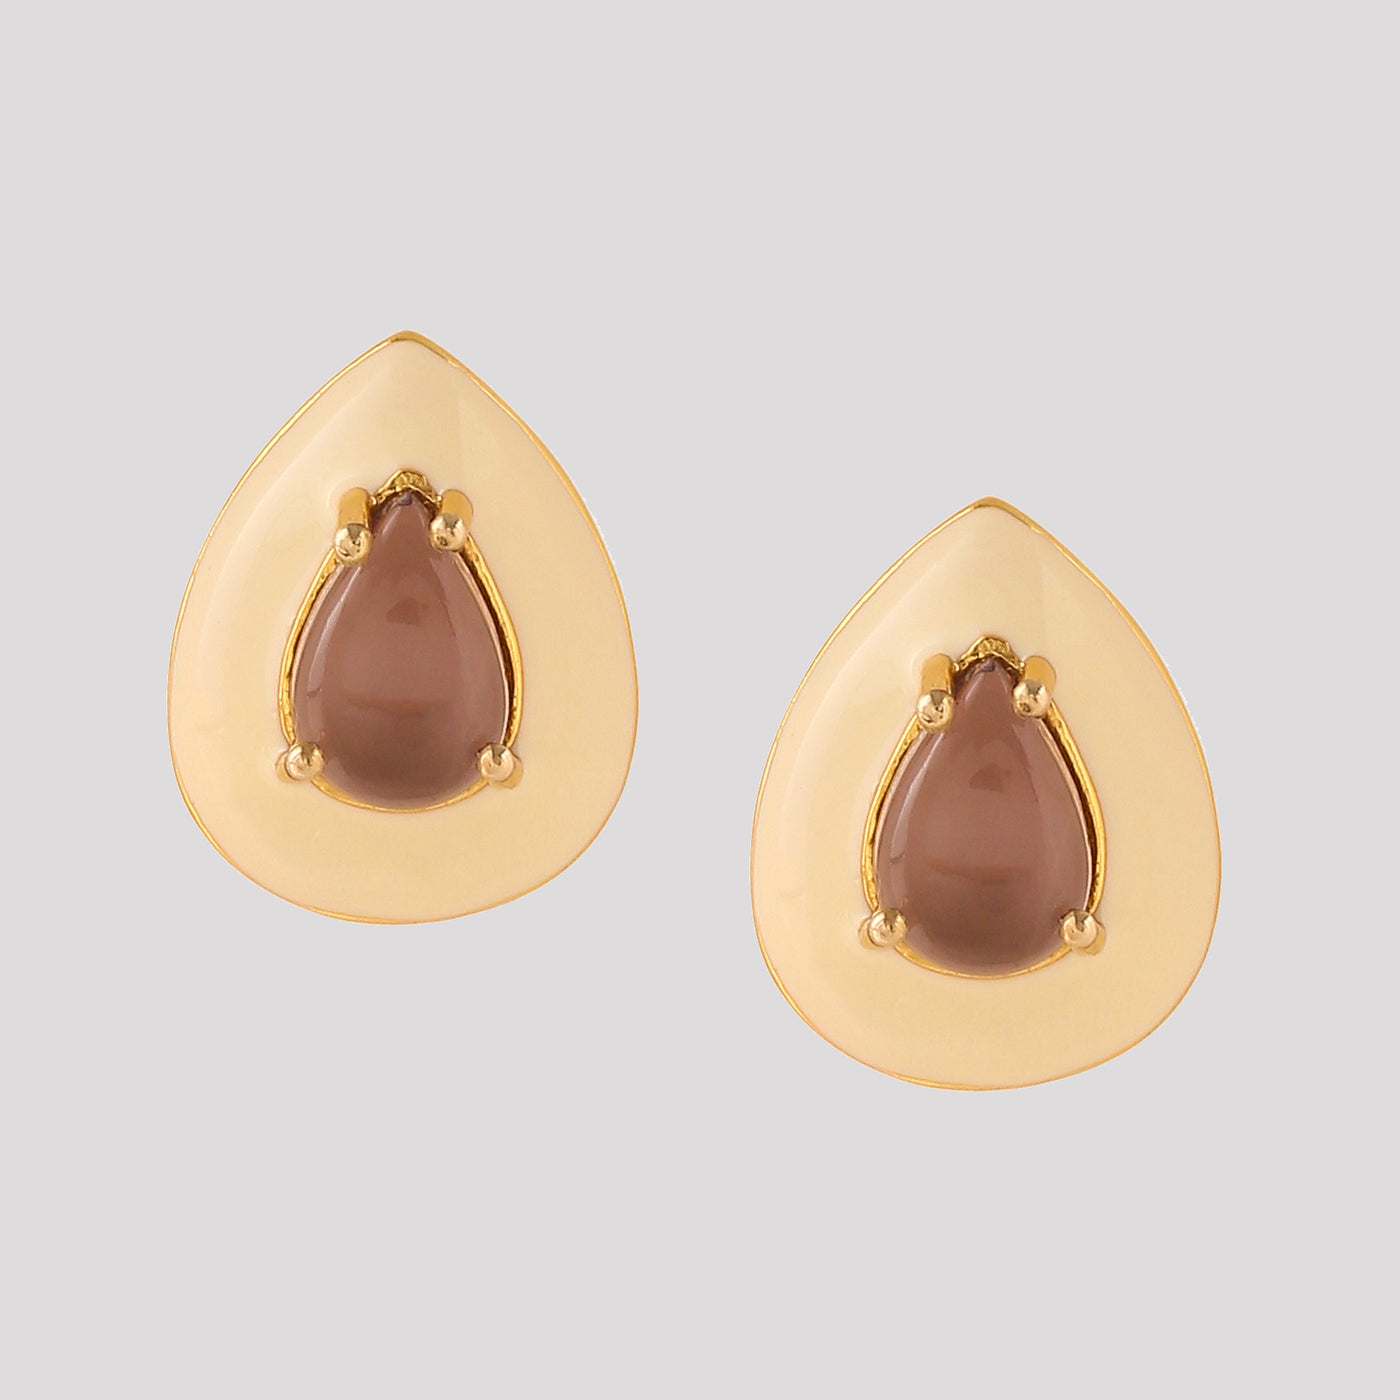 AZGA 22kt gold plated Drop Earrings